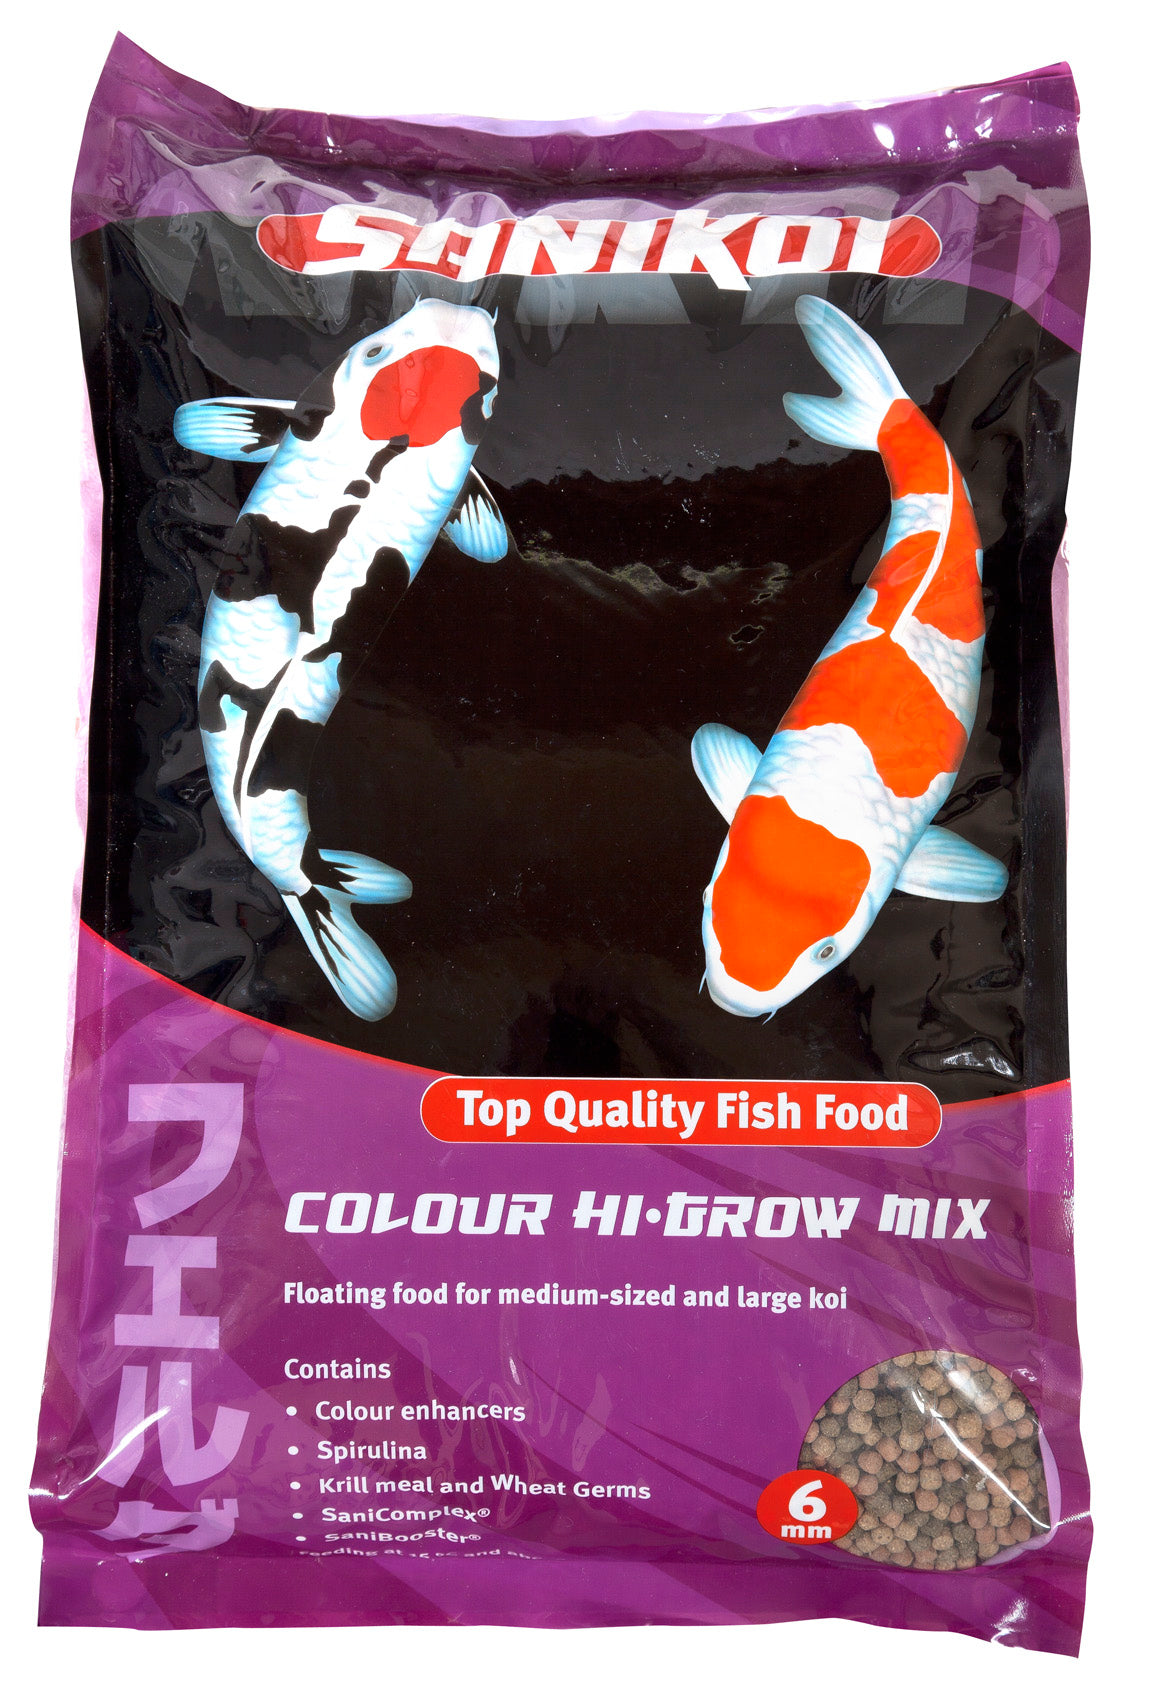 Colour Hi-Grow Mix 6 mm